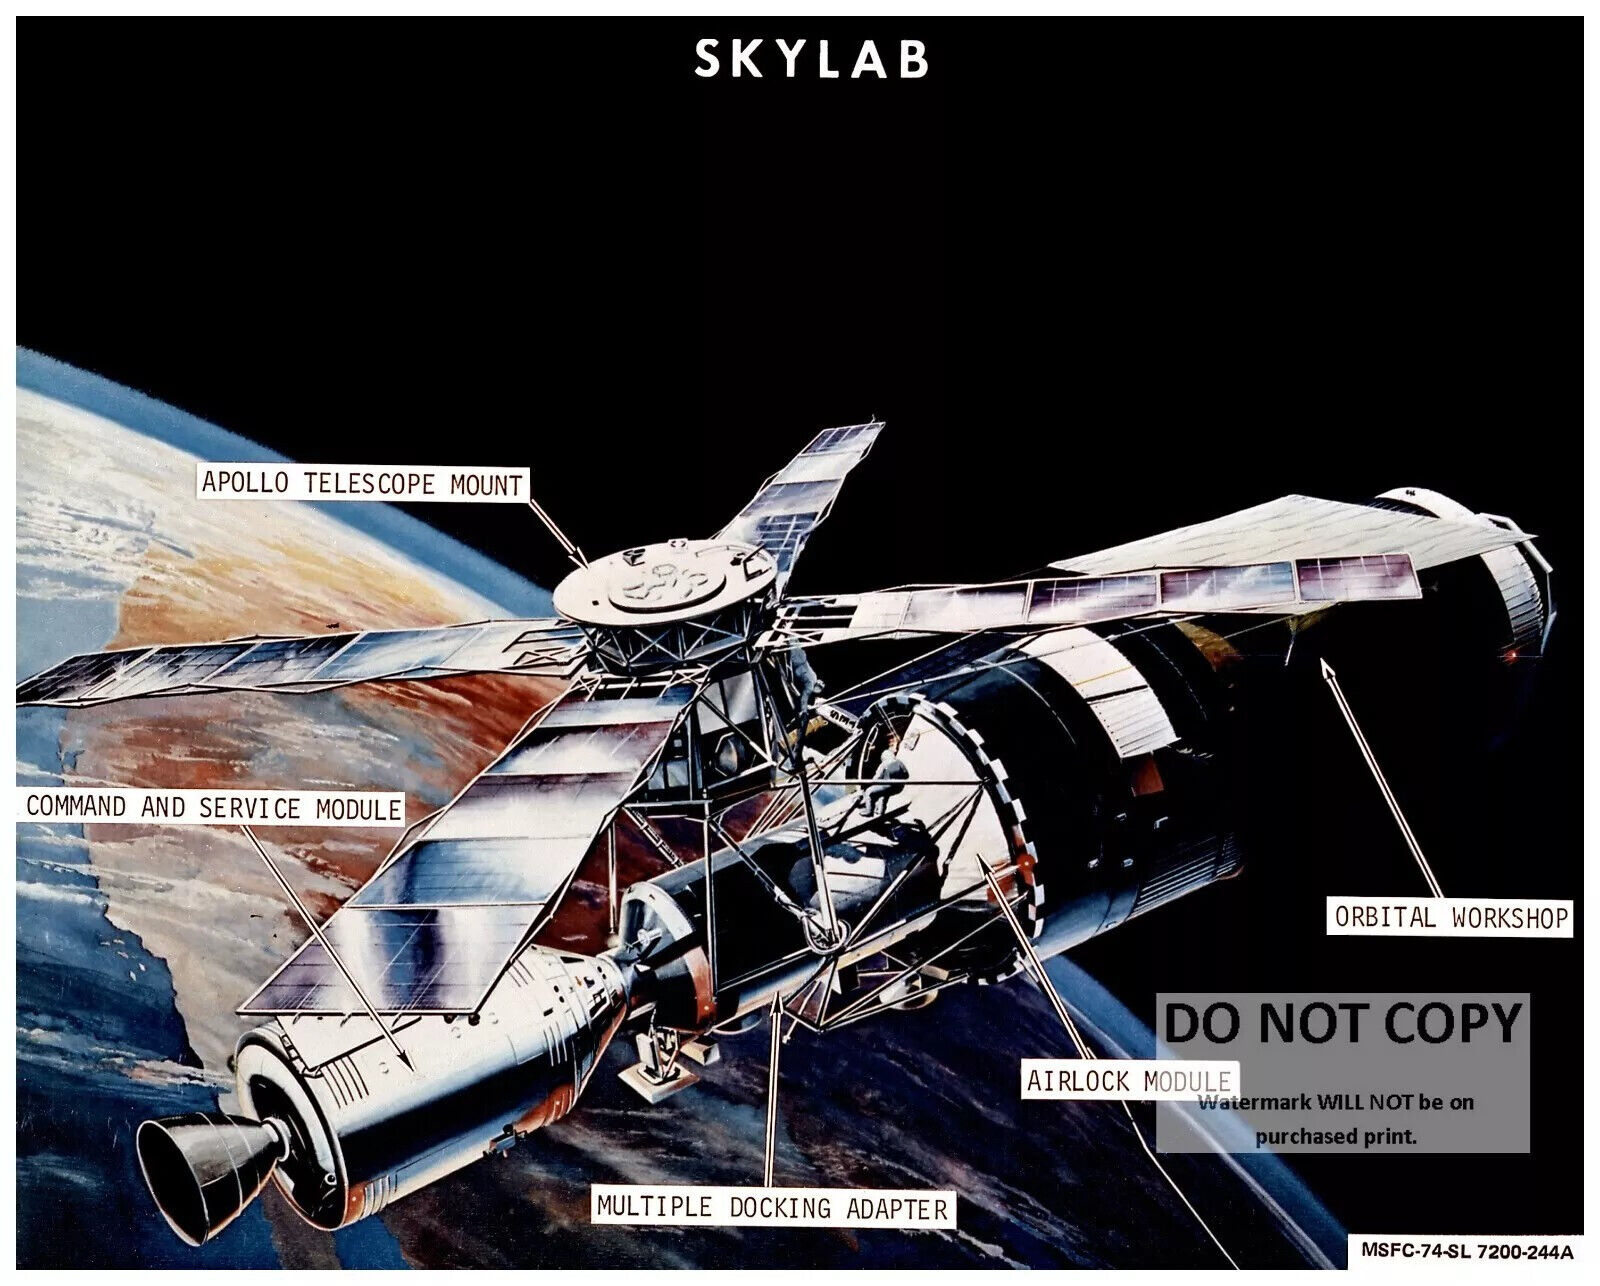 ARTIST'S CONCEPT OF THE SKYLAB SPACE STATION IN ORBIT - 8X10 NASA PHOTO (AZ-075)